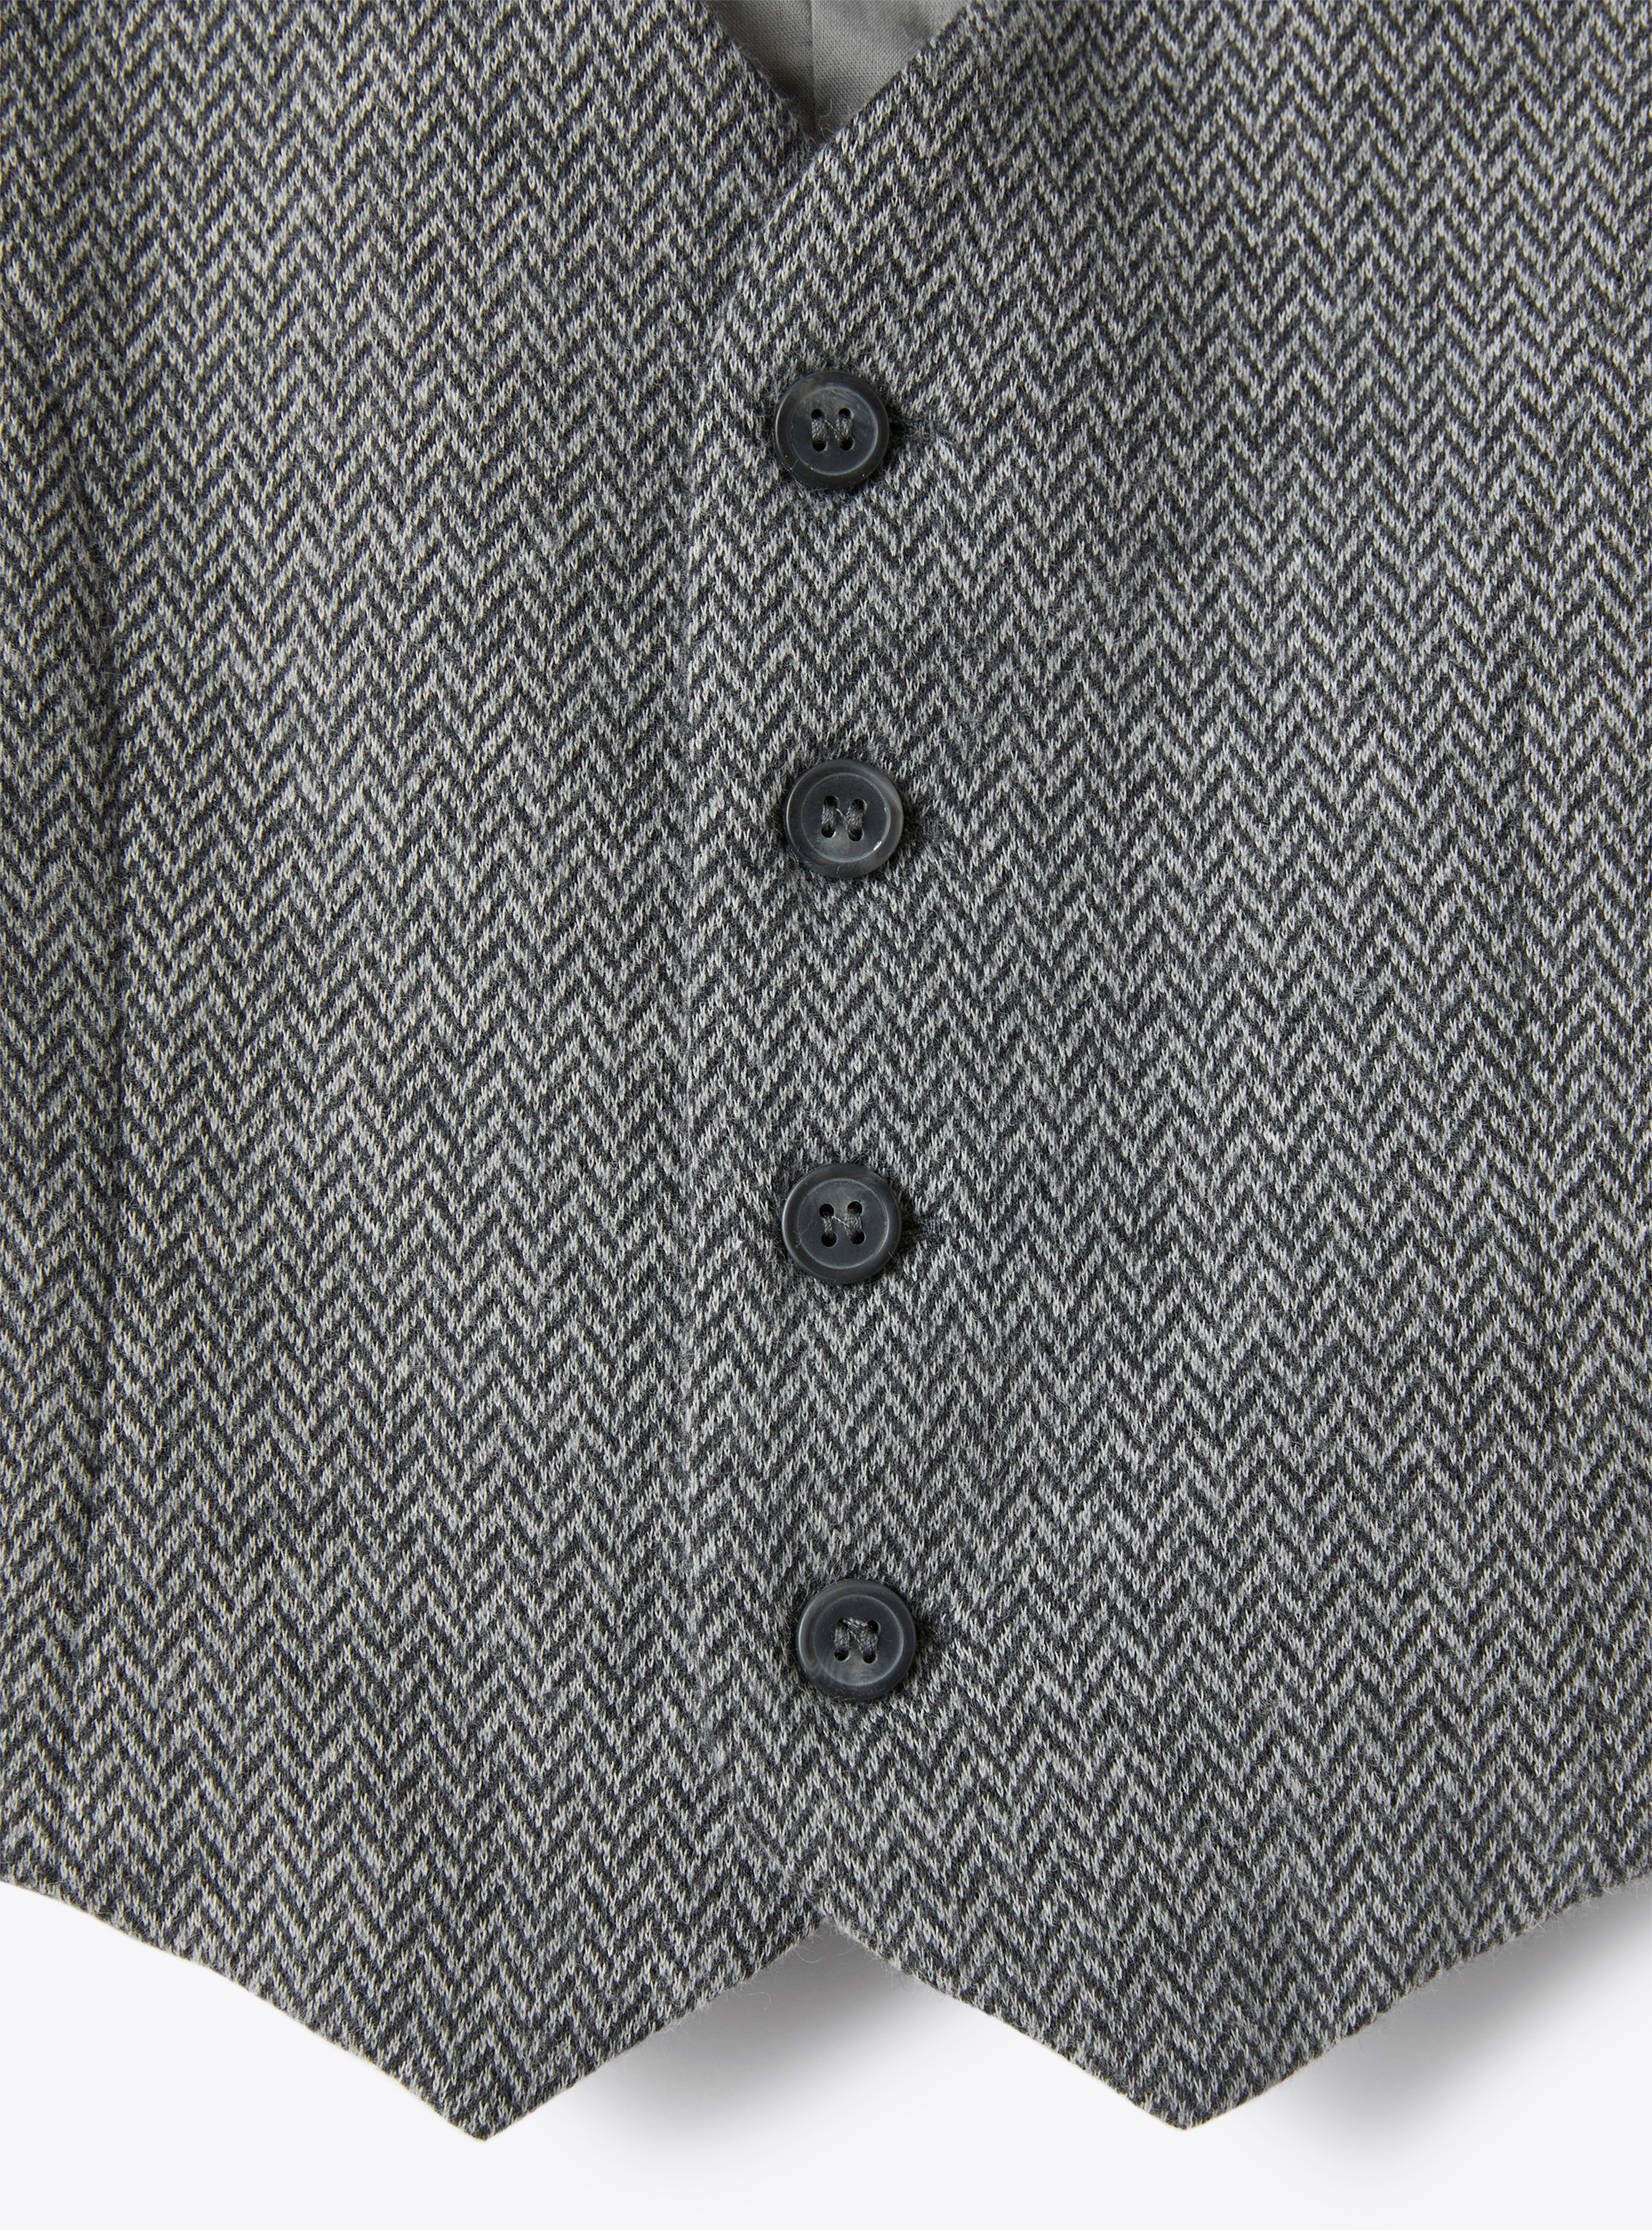 Gilet in herringbone-patterned cotton - Grey | Il Gufo